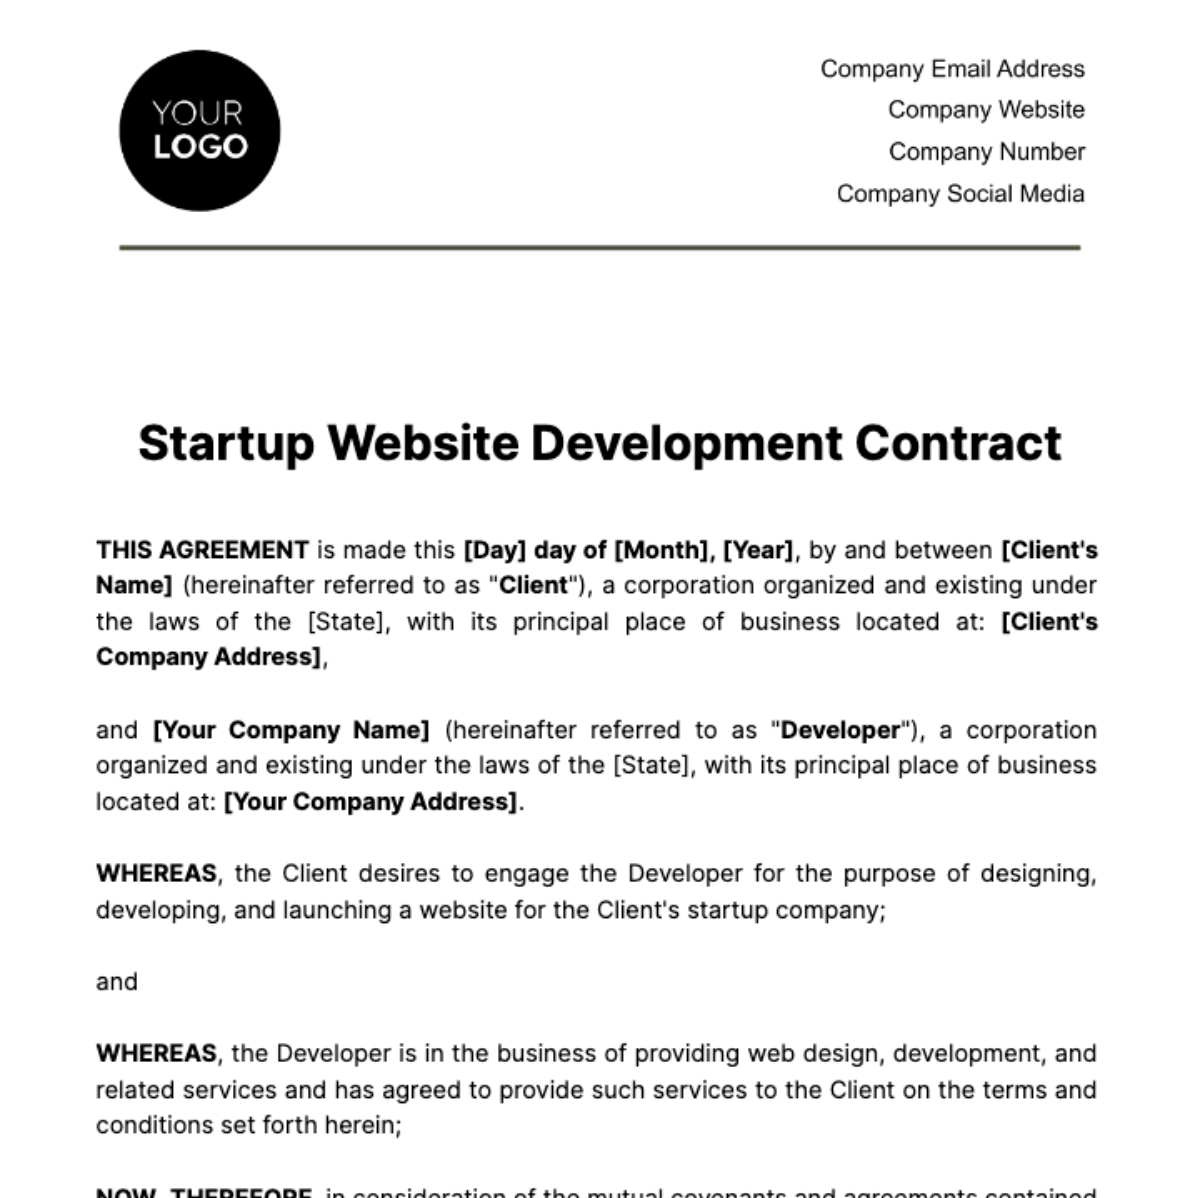 Startup Website Development Contract Template